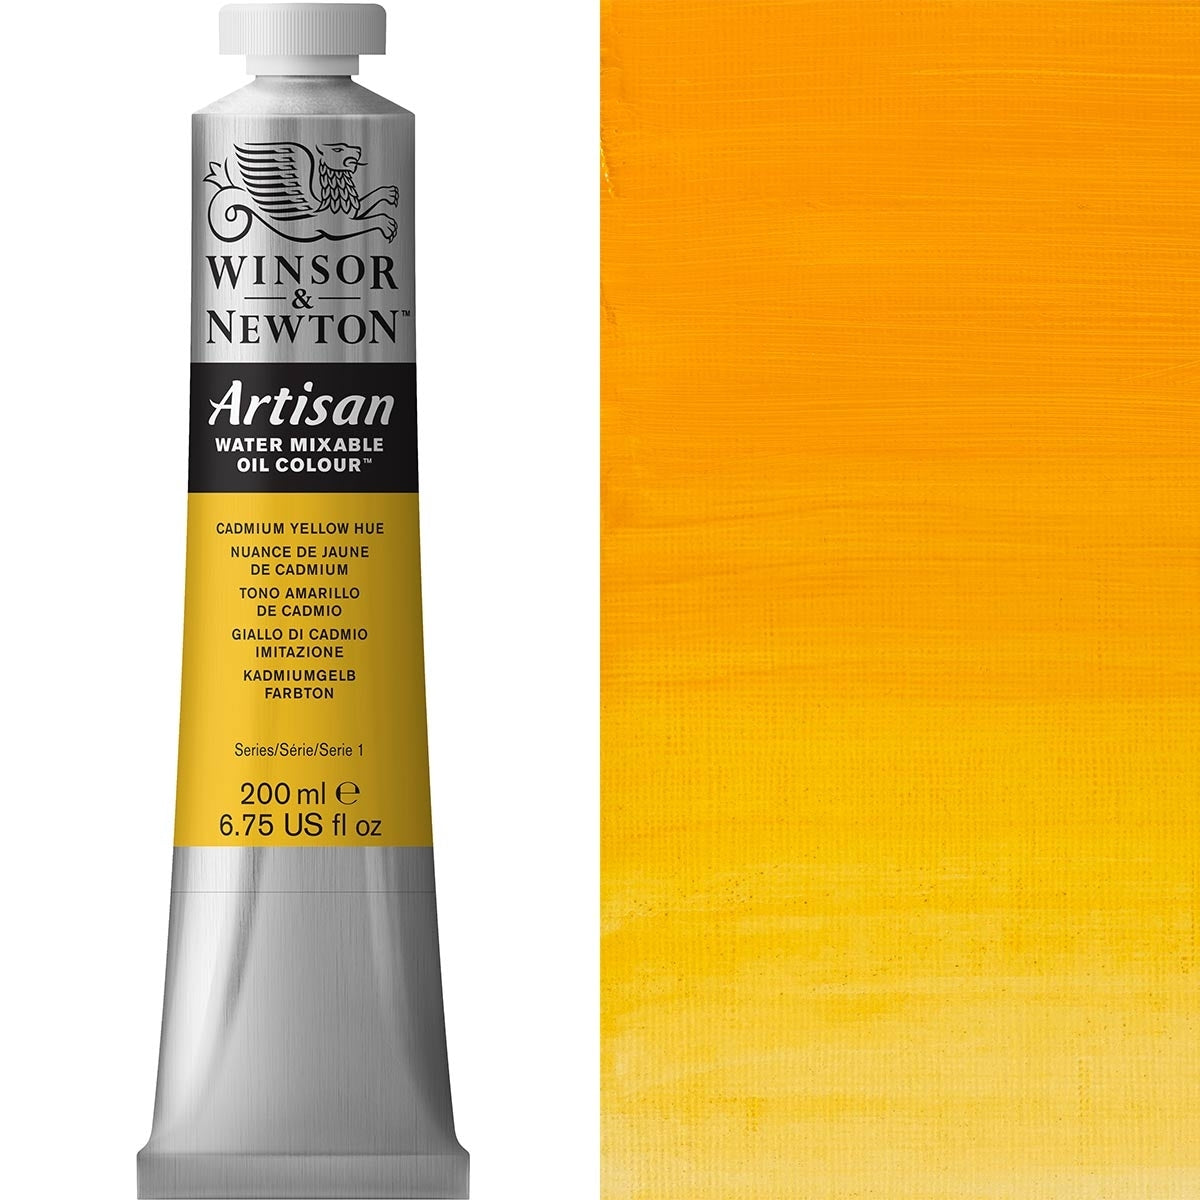 Winsor and Newton - Artisan Oil Colour Watermixable - 200ml - Cadmium Yellow Hue